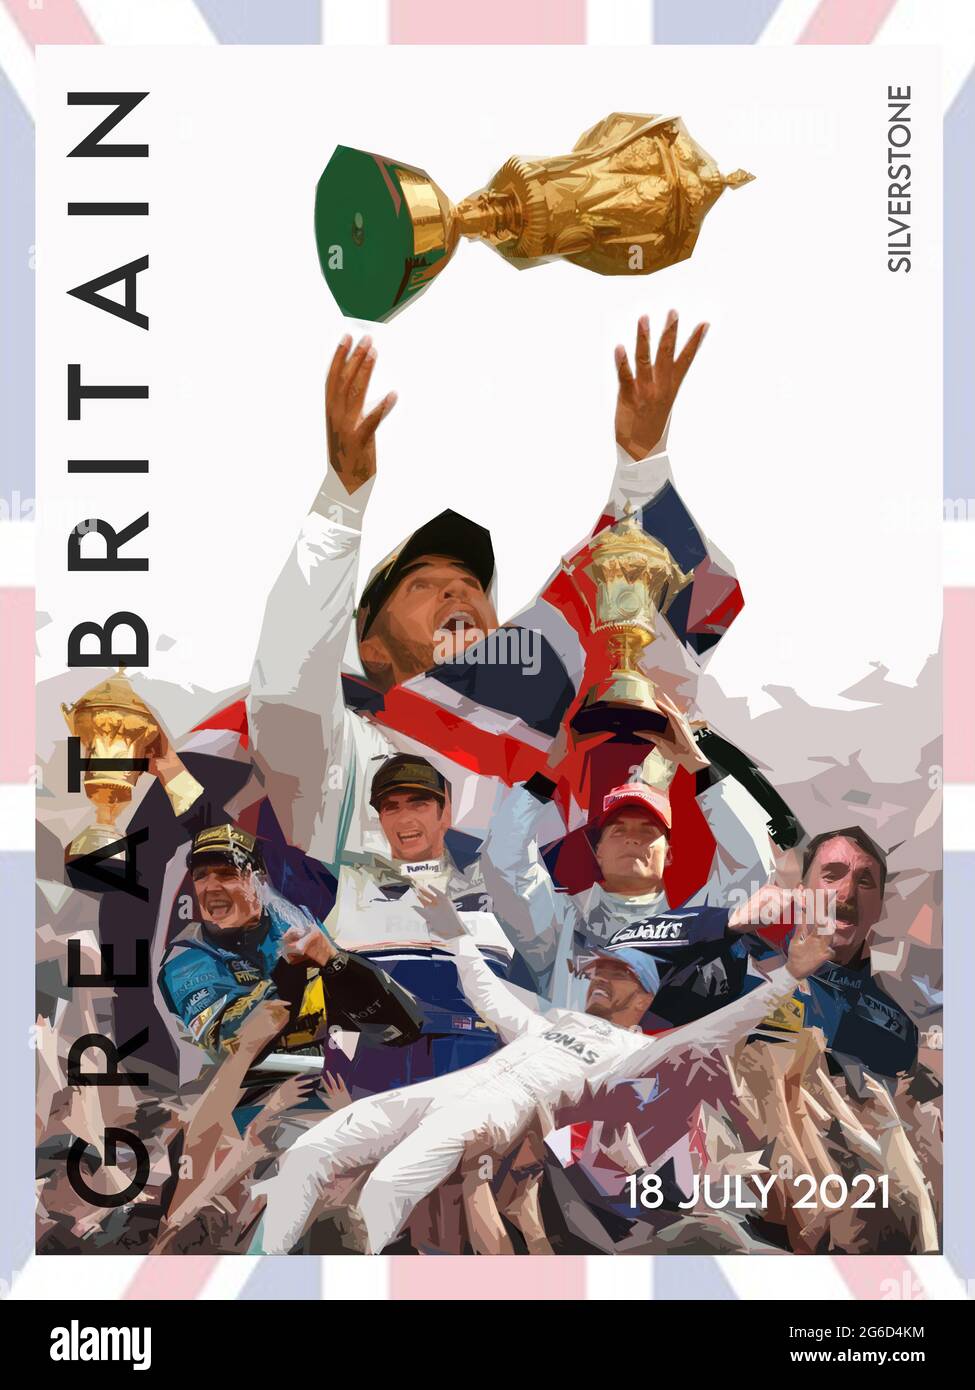 Britsig Grand Prix Race Weekend Poster Stock Photo